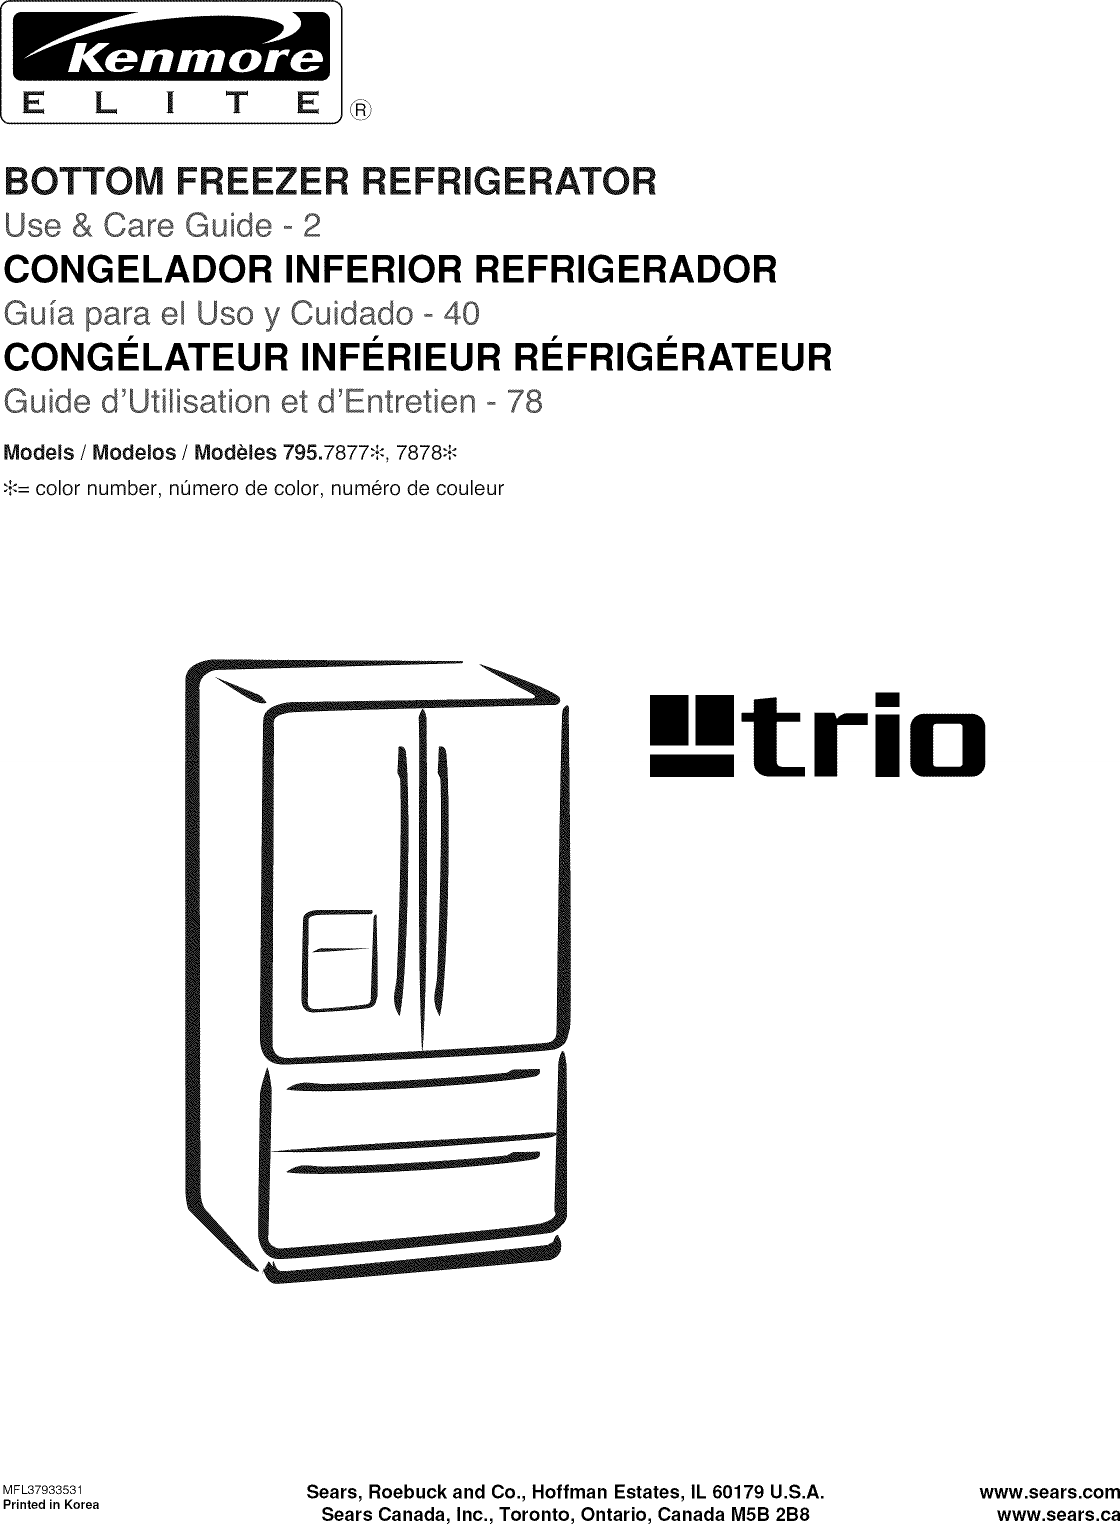 Kenmore refrigerator 363.8704412 user manual online